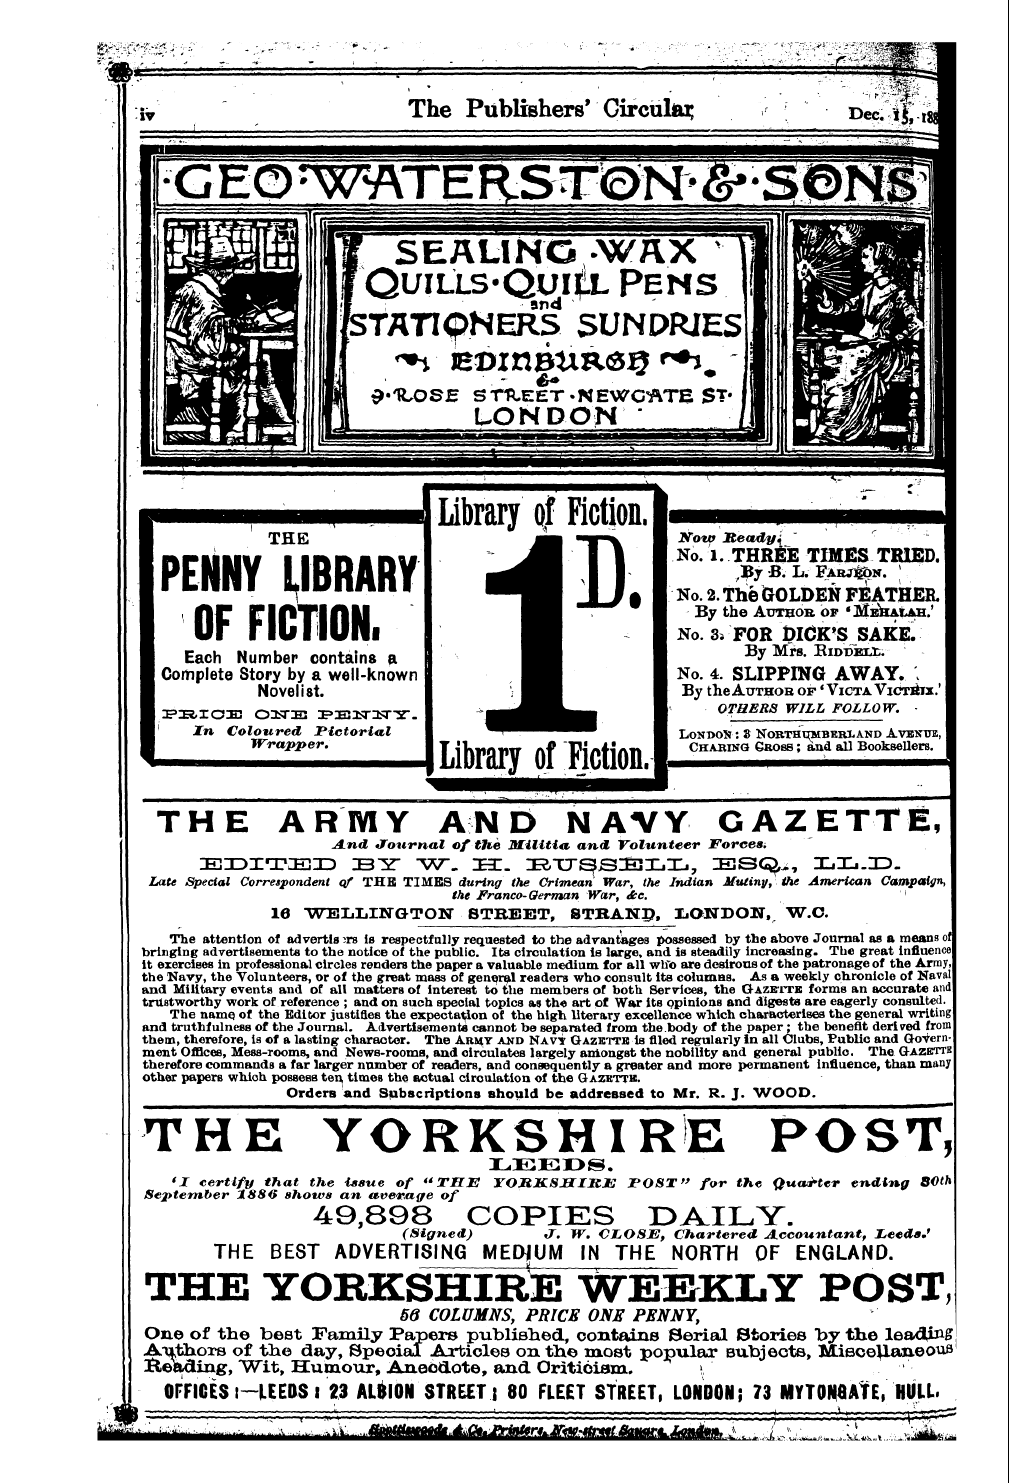 Publishers’ Circular (1880-1890): jS F Y, 1st edition - Ad05603